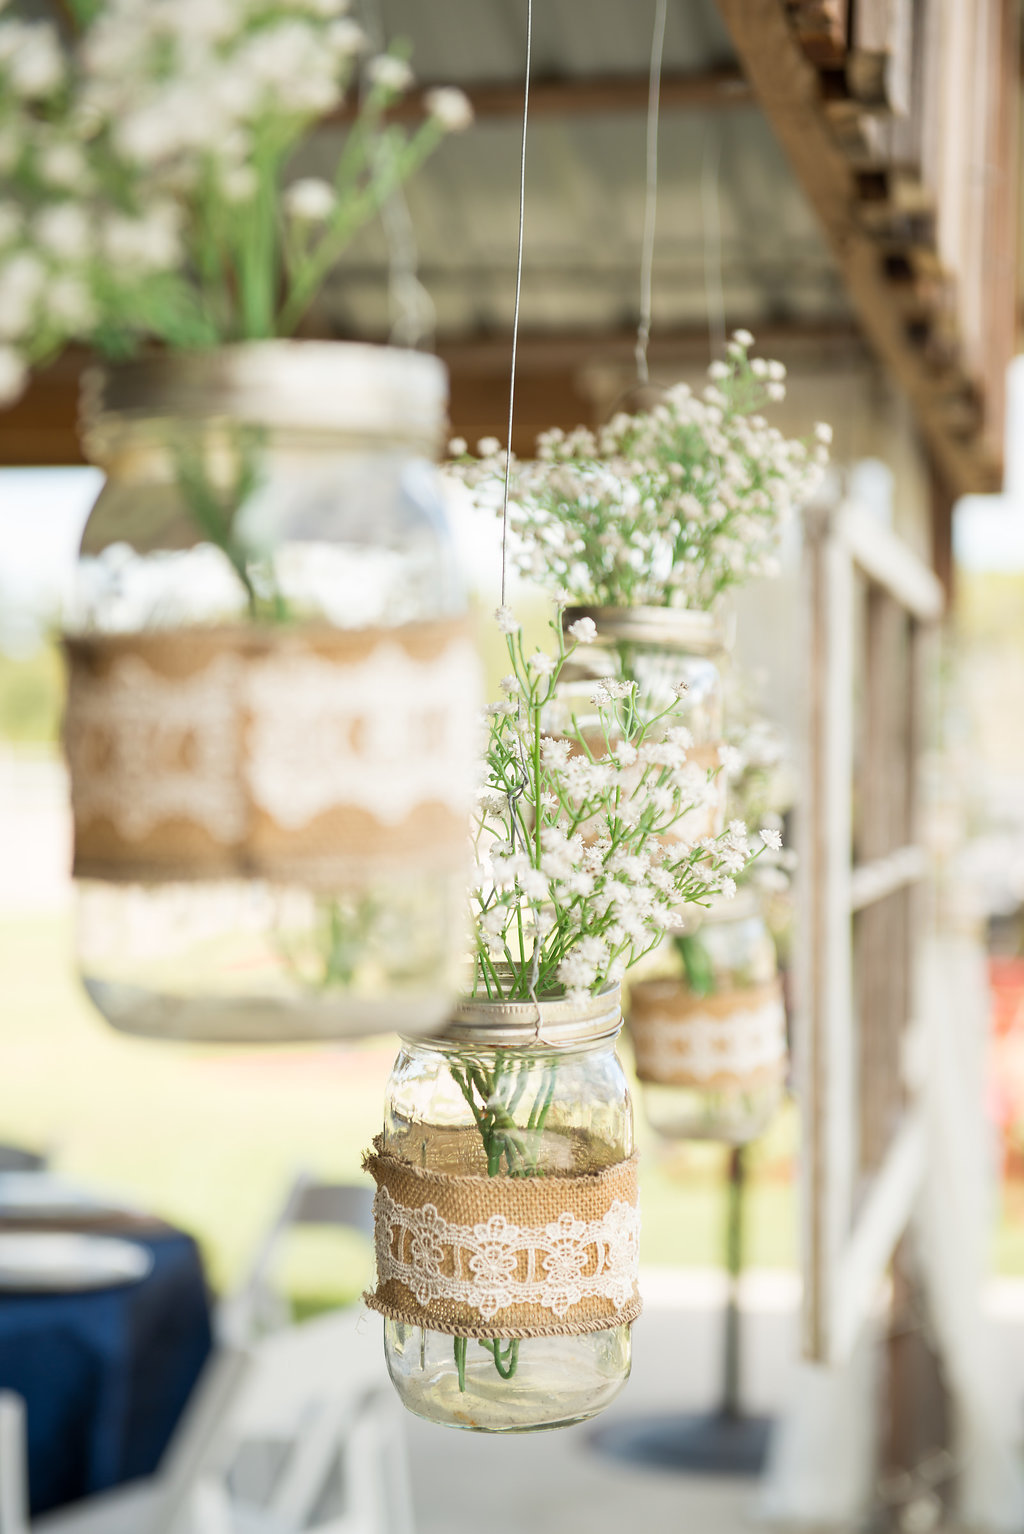 Rustic Barn Wedding Decor with Lace and Burlap Hanging Mason Jar with Baby's Breath Floral | Tampa Bay Barn Wedding Venue Wishing Well Barn